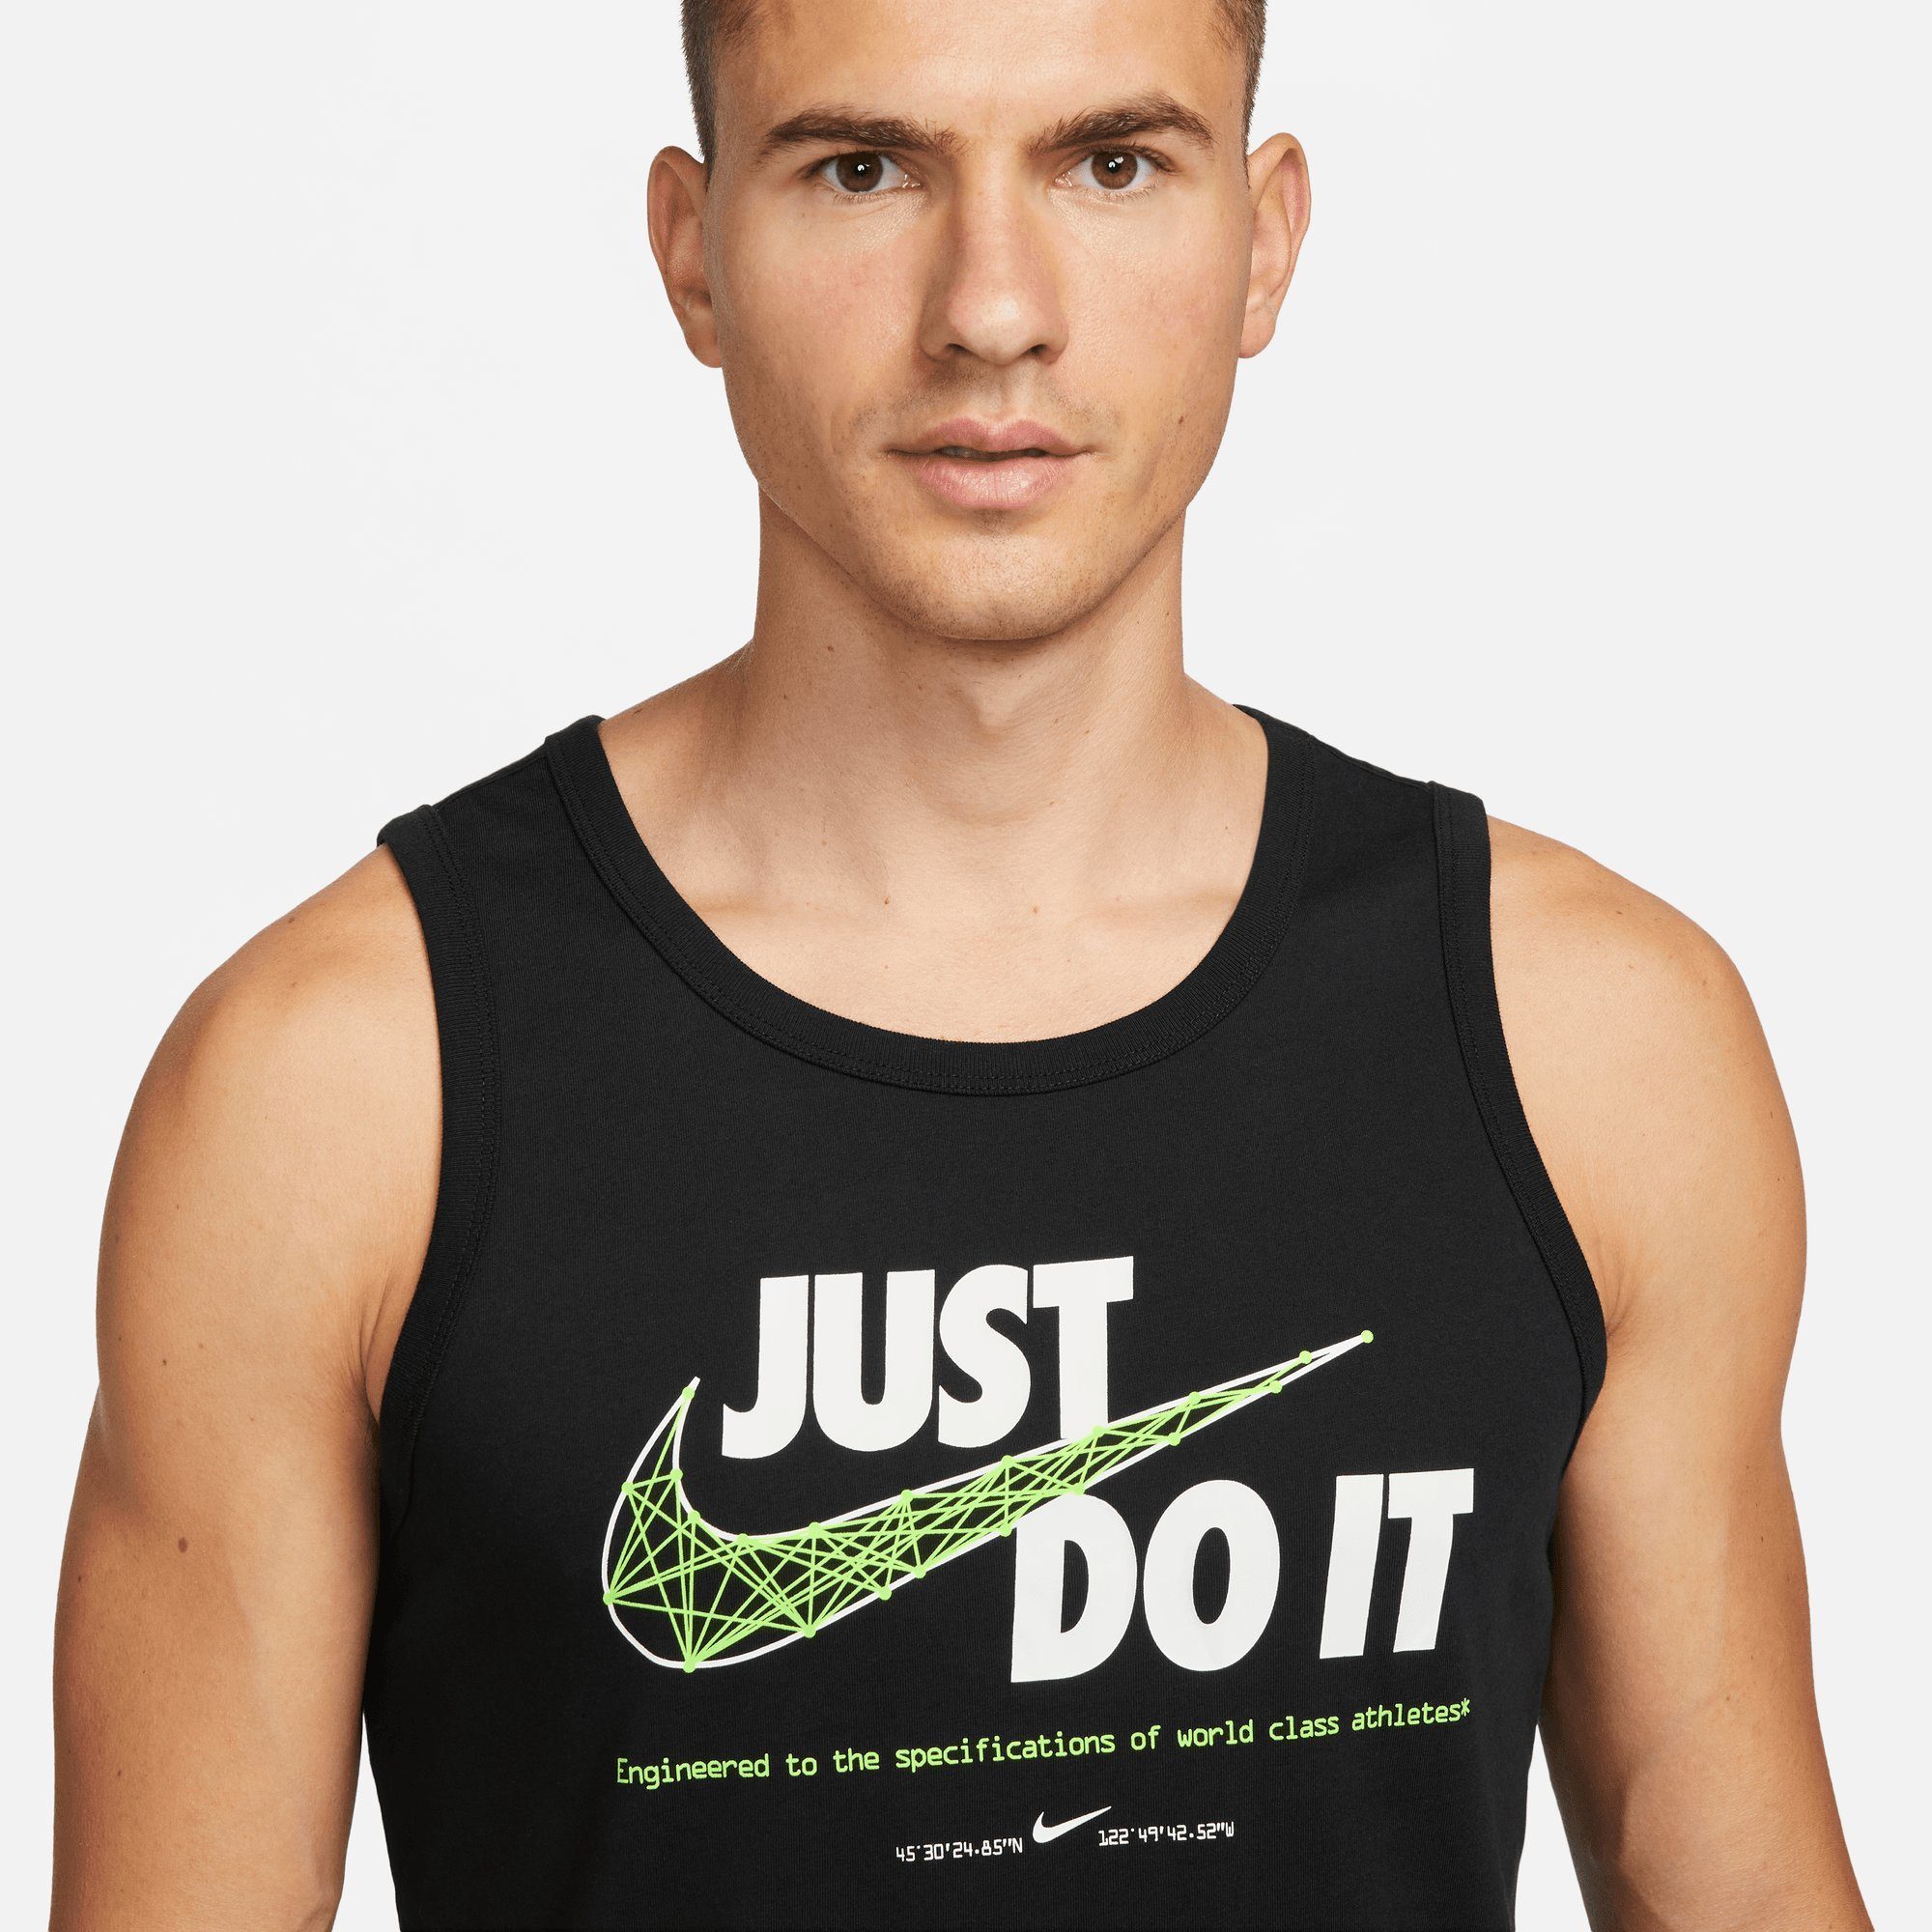 MEN'S FITNESS Nike DRI-FIT TOP Tanktop TANK